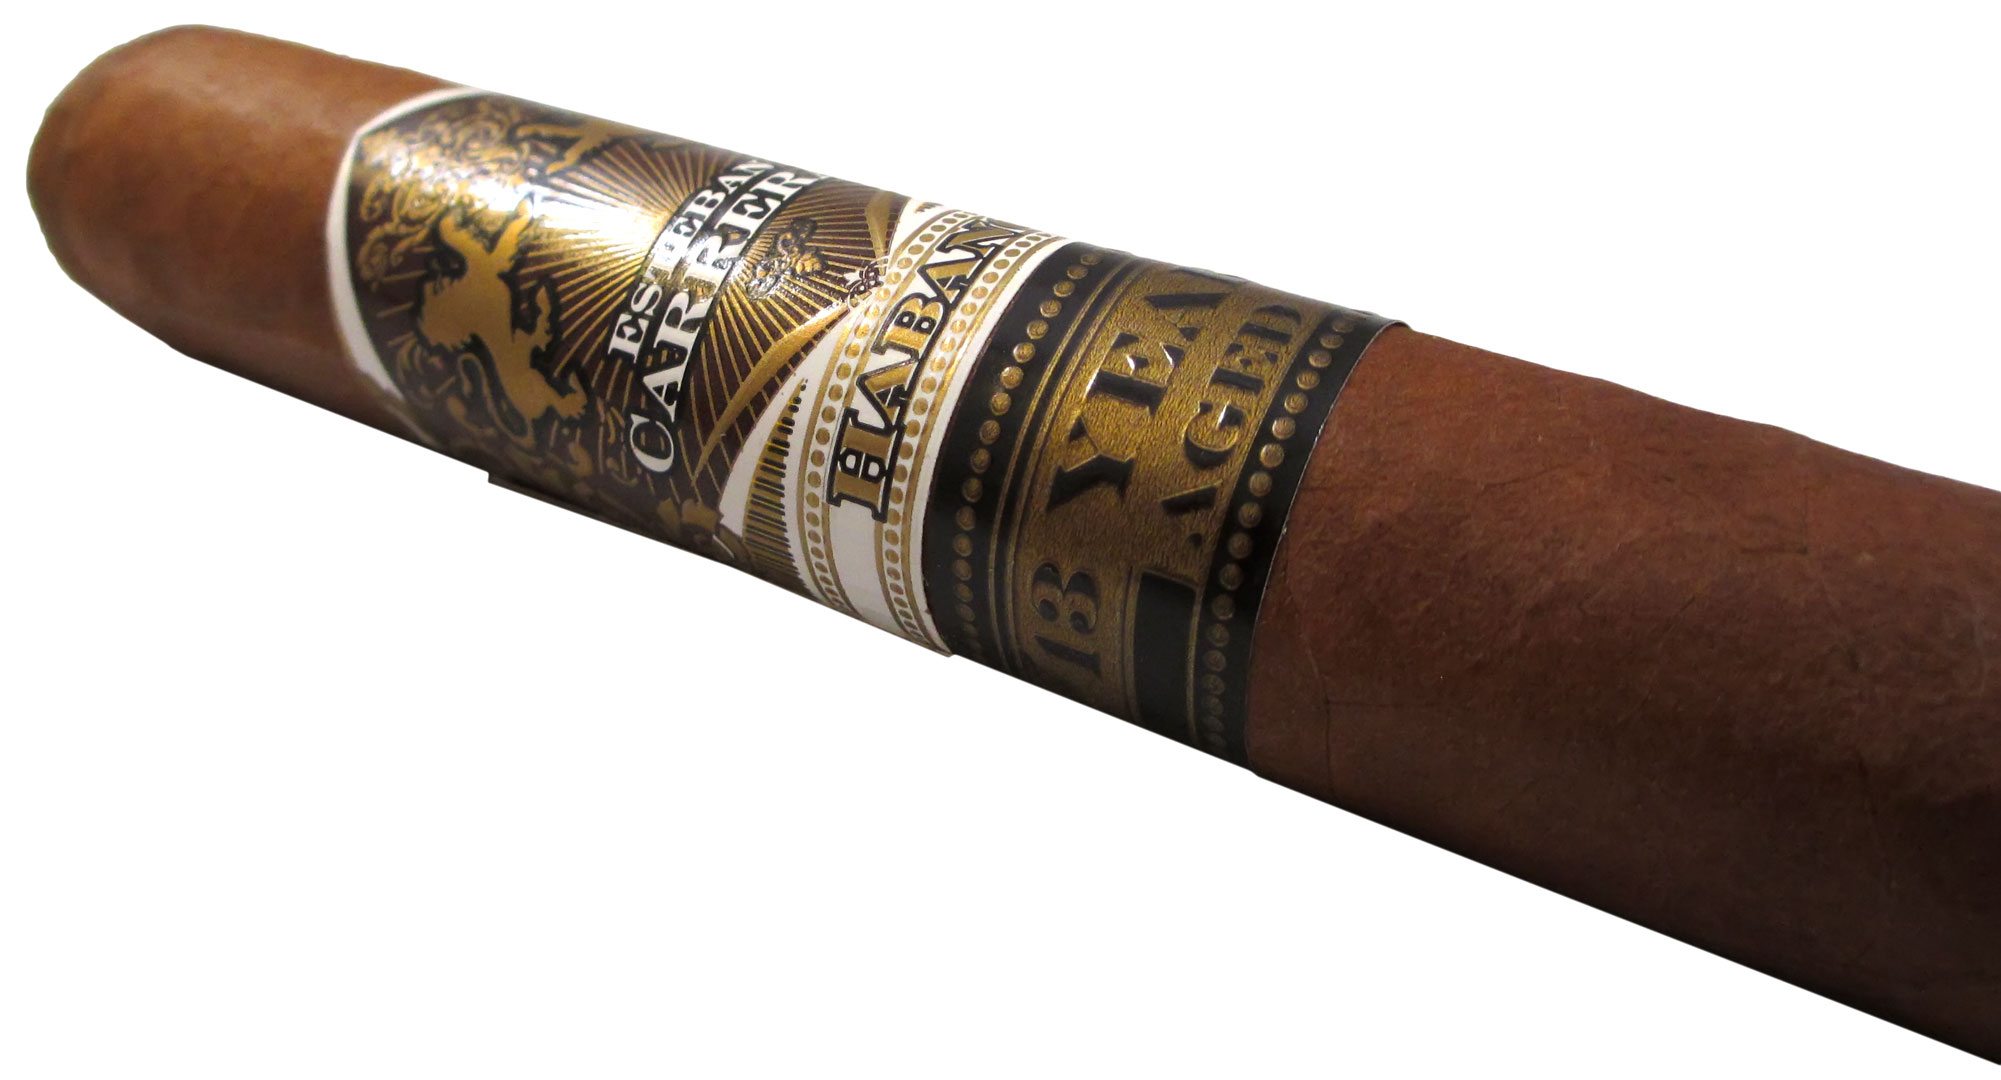 Blind Cigar Review: Esteban Carreras | Habano Toro